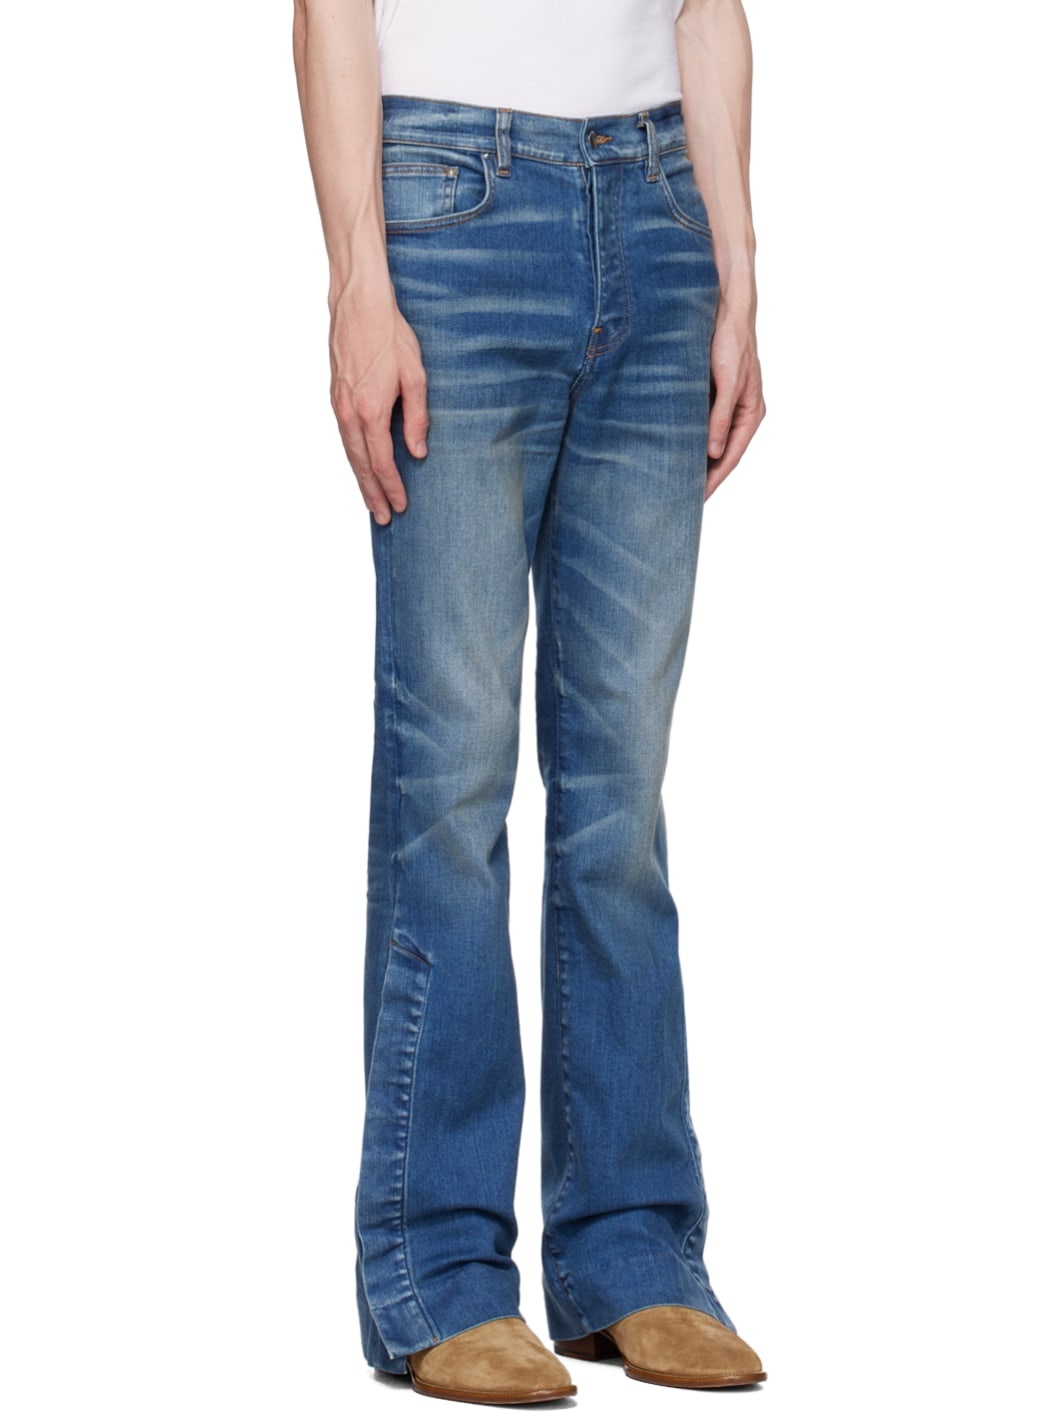 Indigo Stacked Jeans - 2